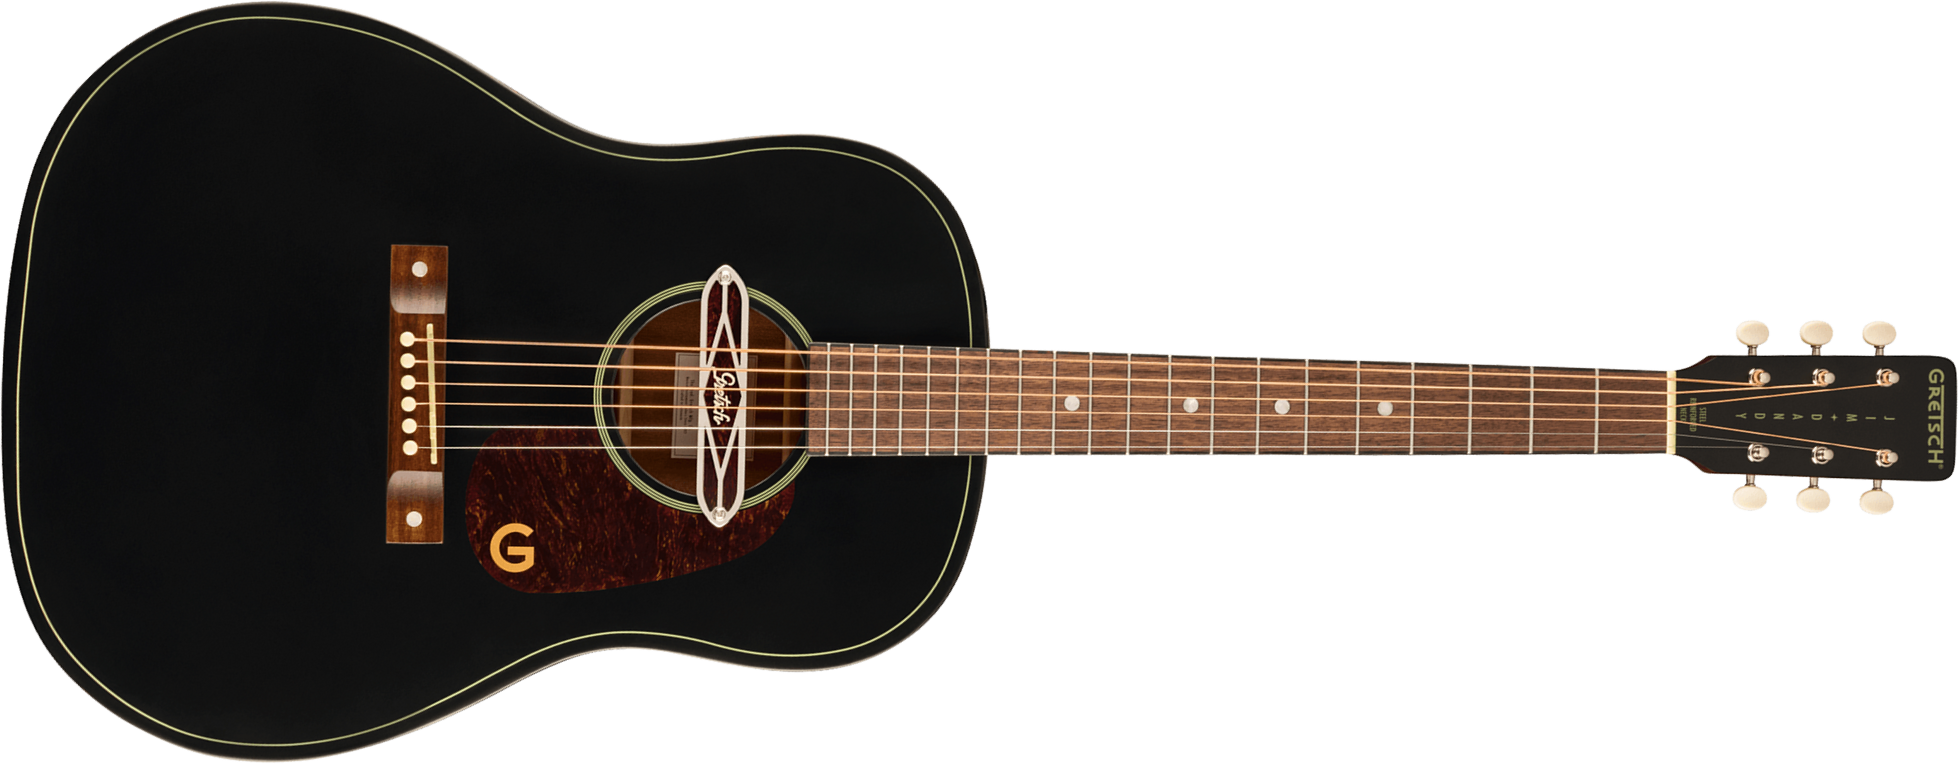 Gretsch Jim Dandy Deltoluxe Dreadnought Tout Sapele Noy - Black Top Semi Gloss - Electro acoustic guitar - Main picture